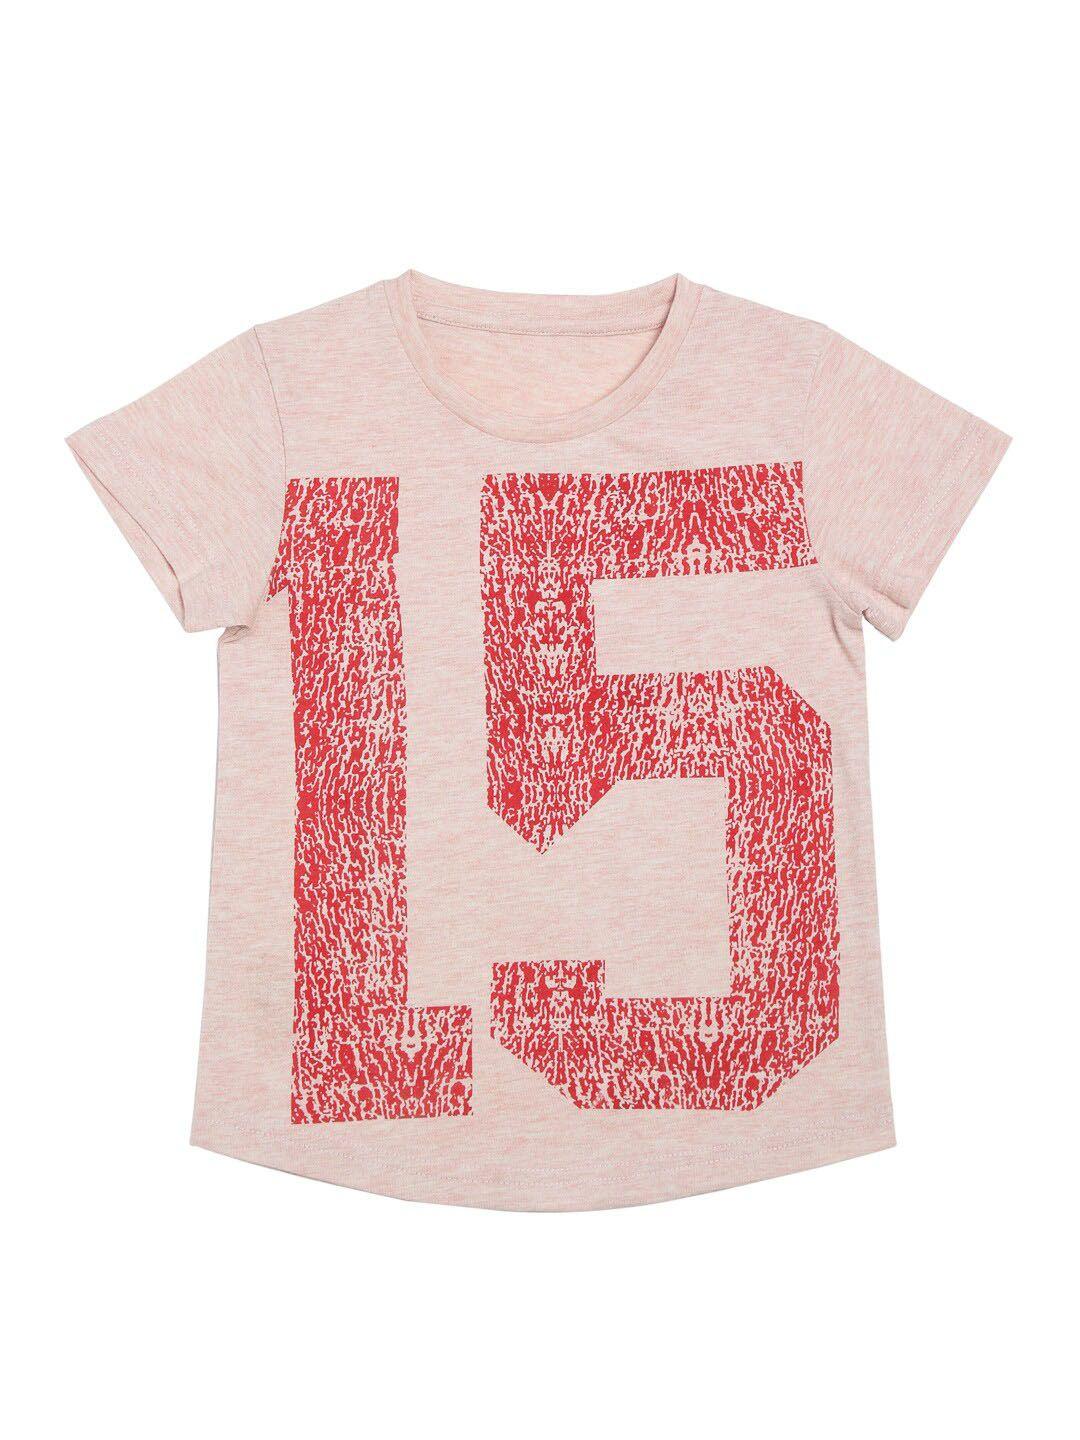 door74-boys-typography-printed-cotton-t-shirt